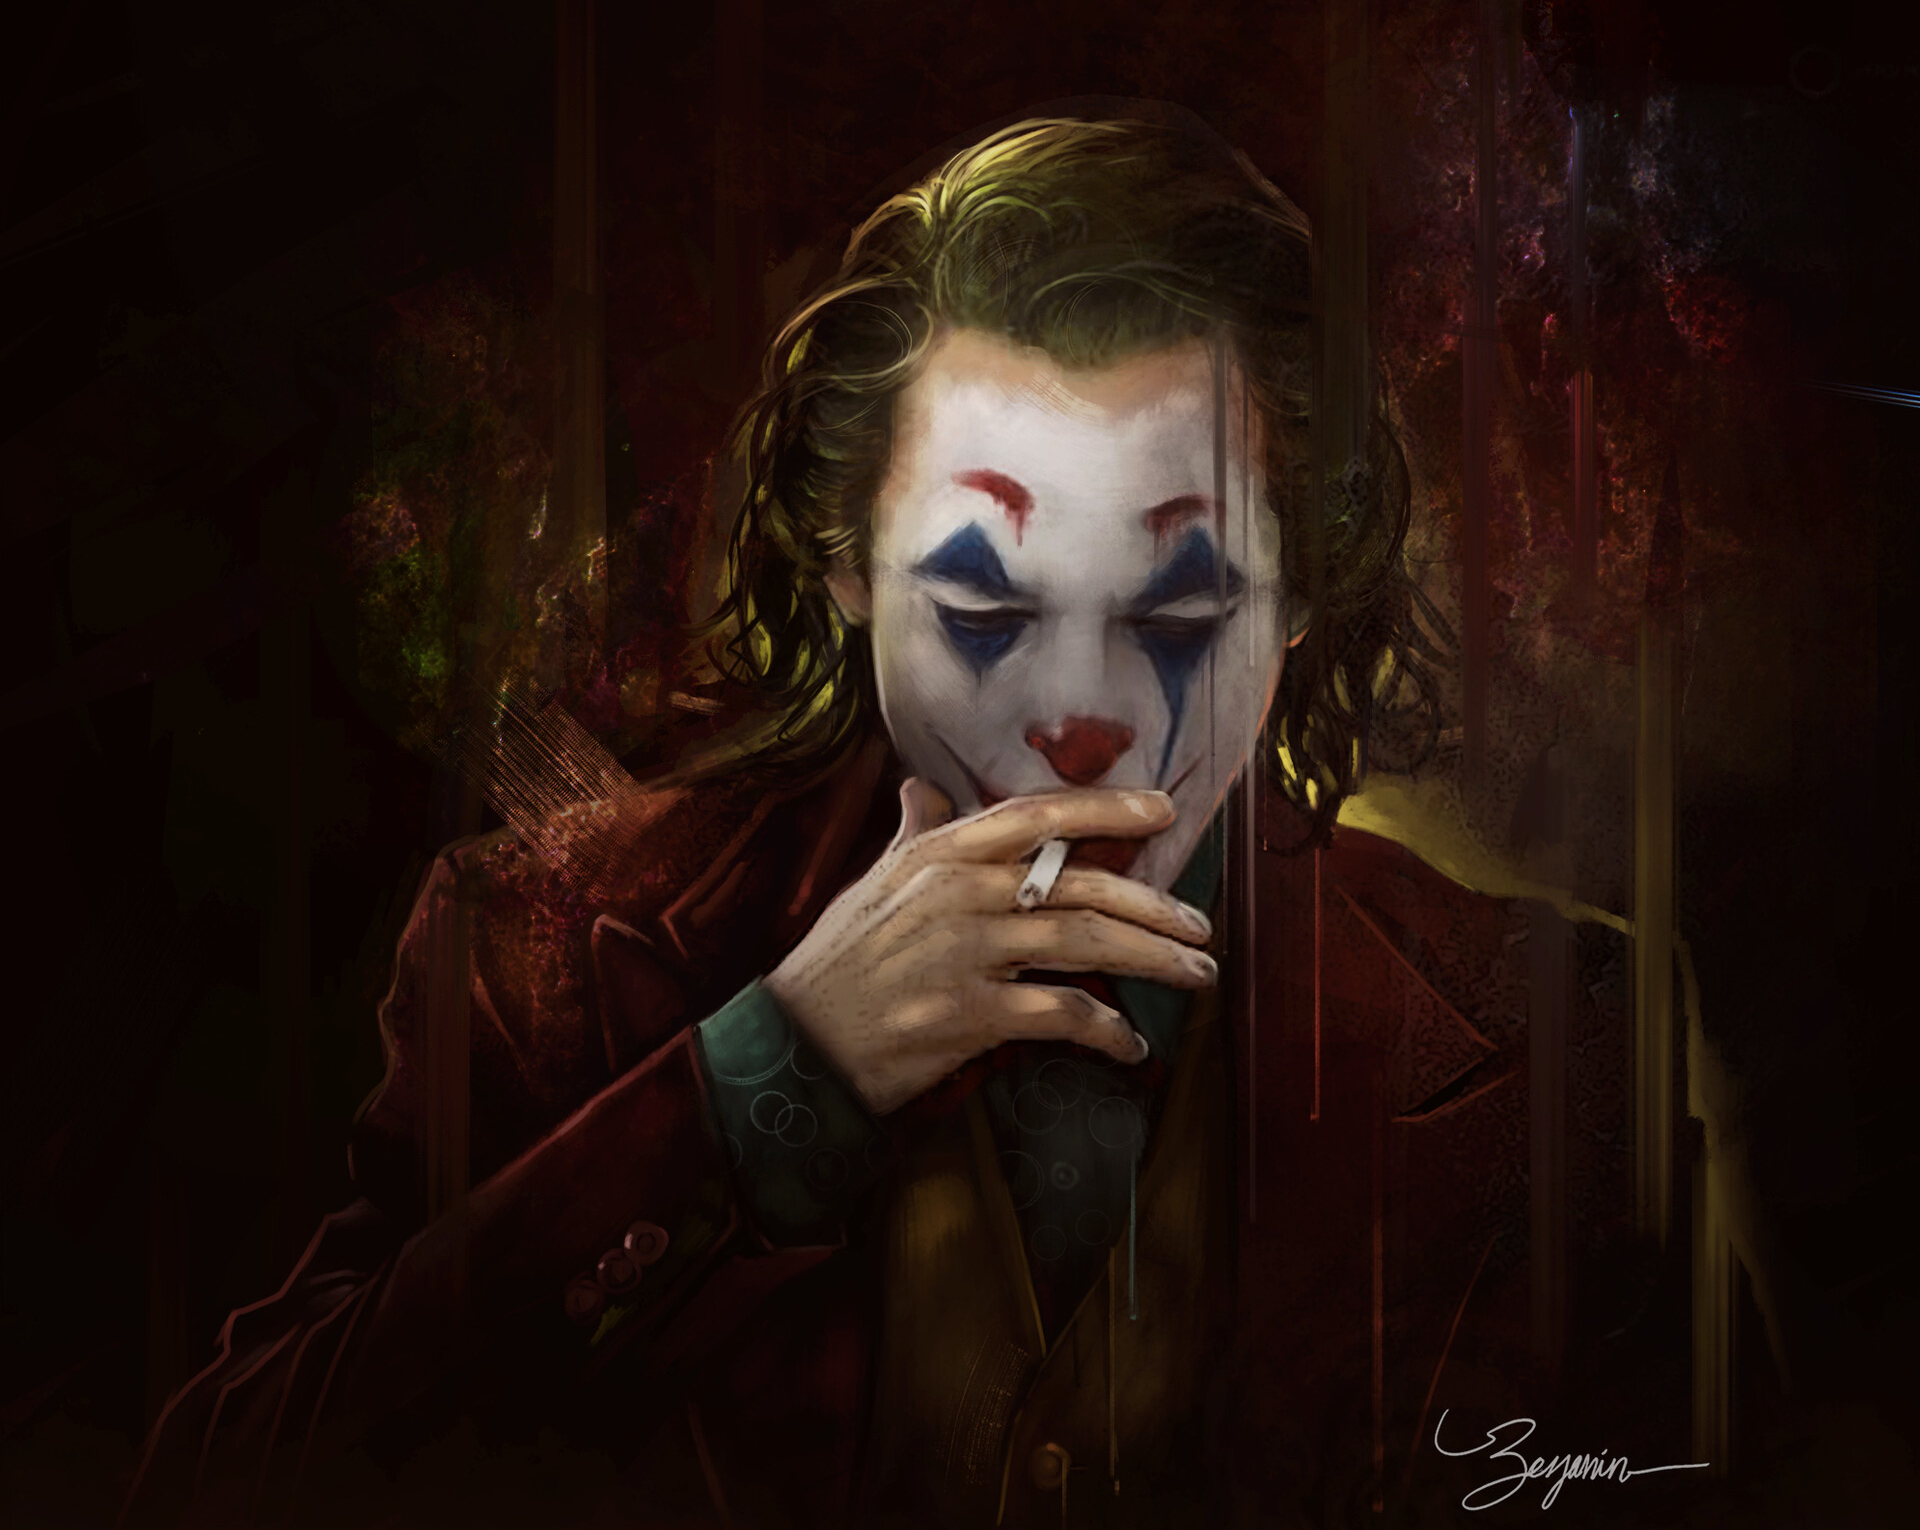 The Joker Smoking A Cigarette 高清壁纸 桌面背景 1920x1530 Id 1050974 Wallpaper Abyss